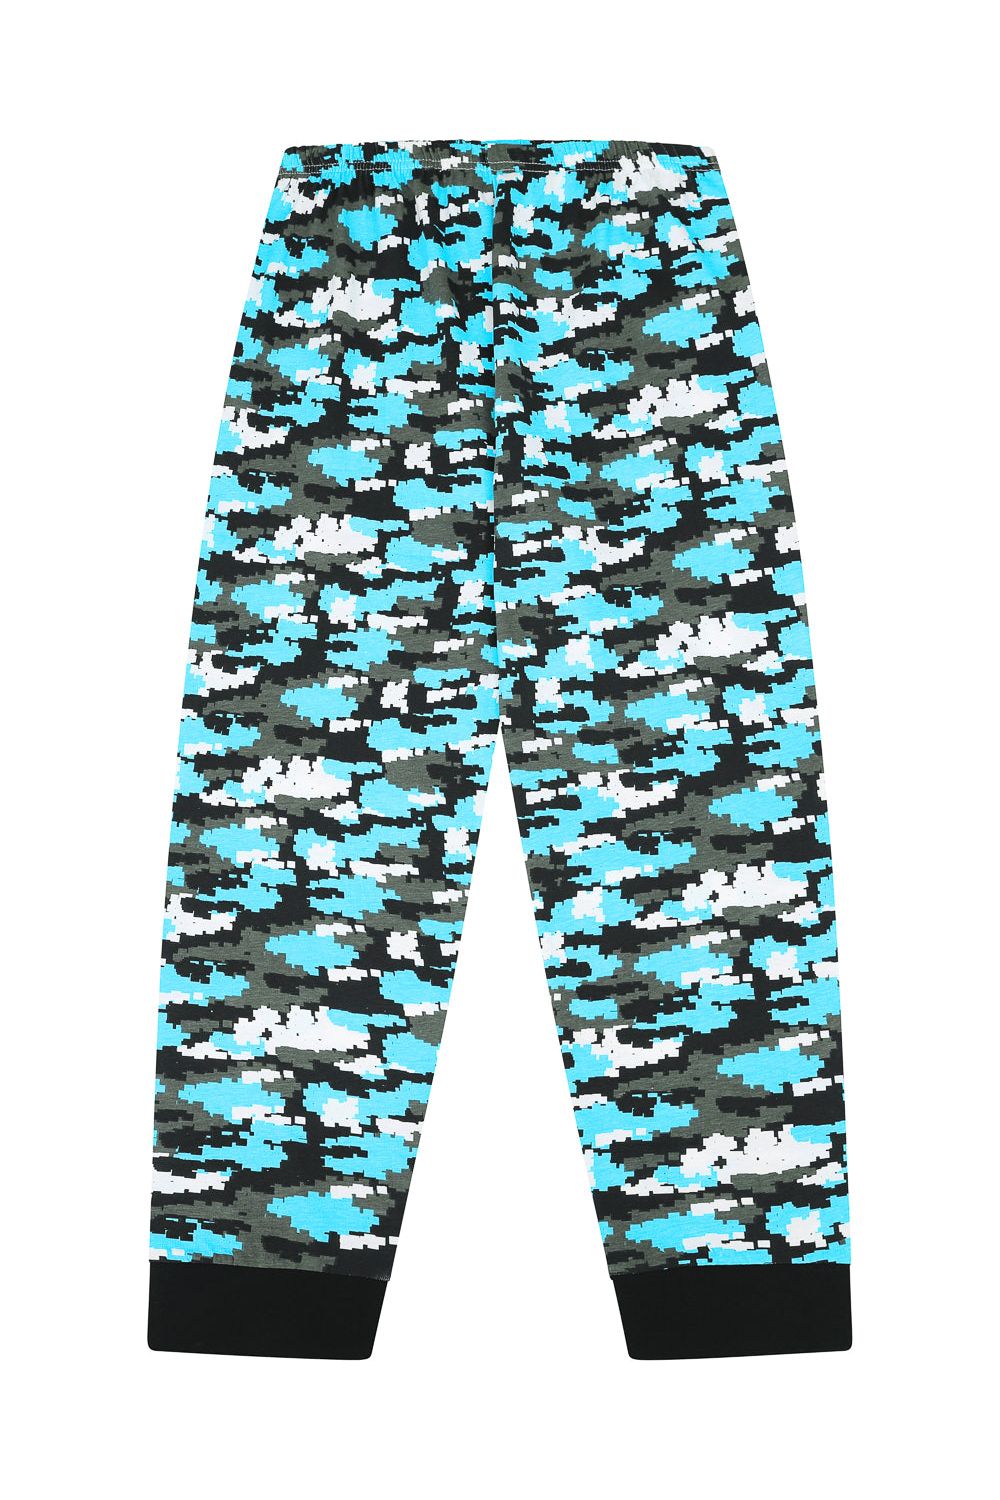 Boys All I Care About Is Gaming Blue Camouflage Pyjamas - Pyjamas.com